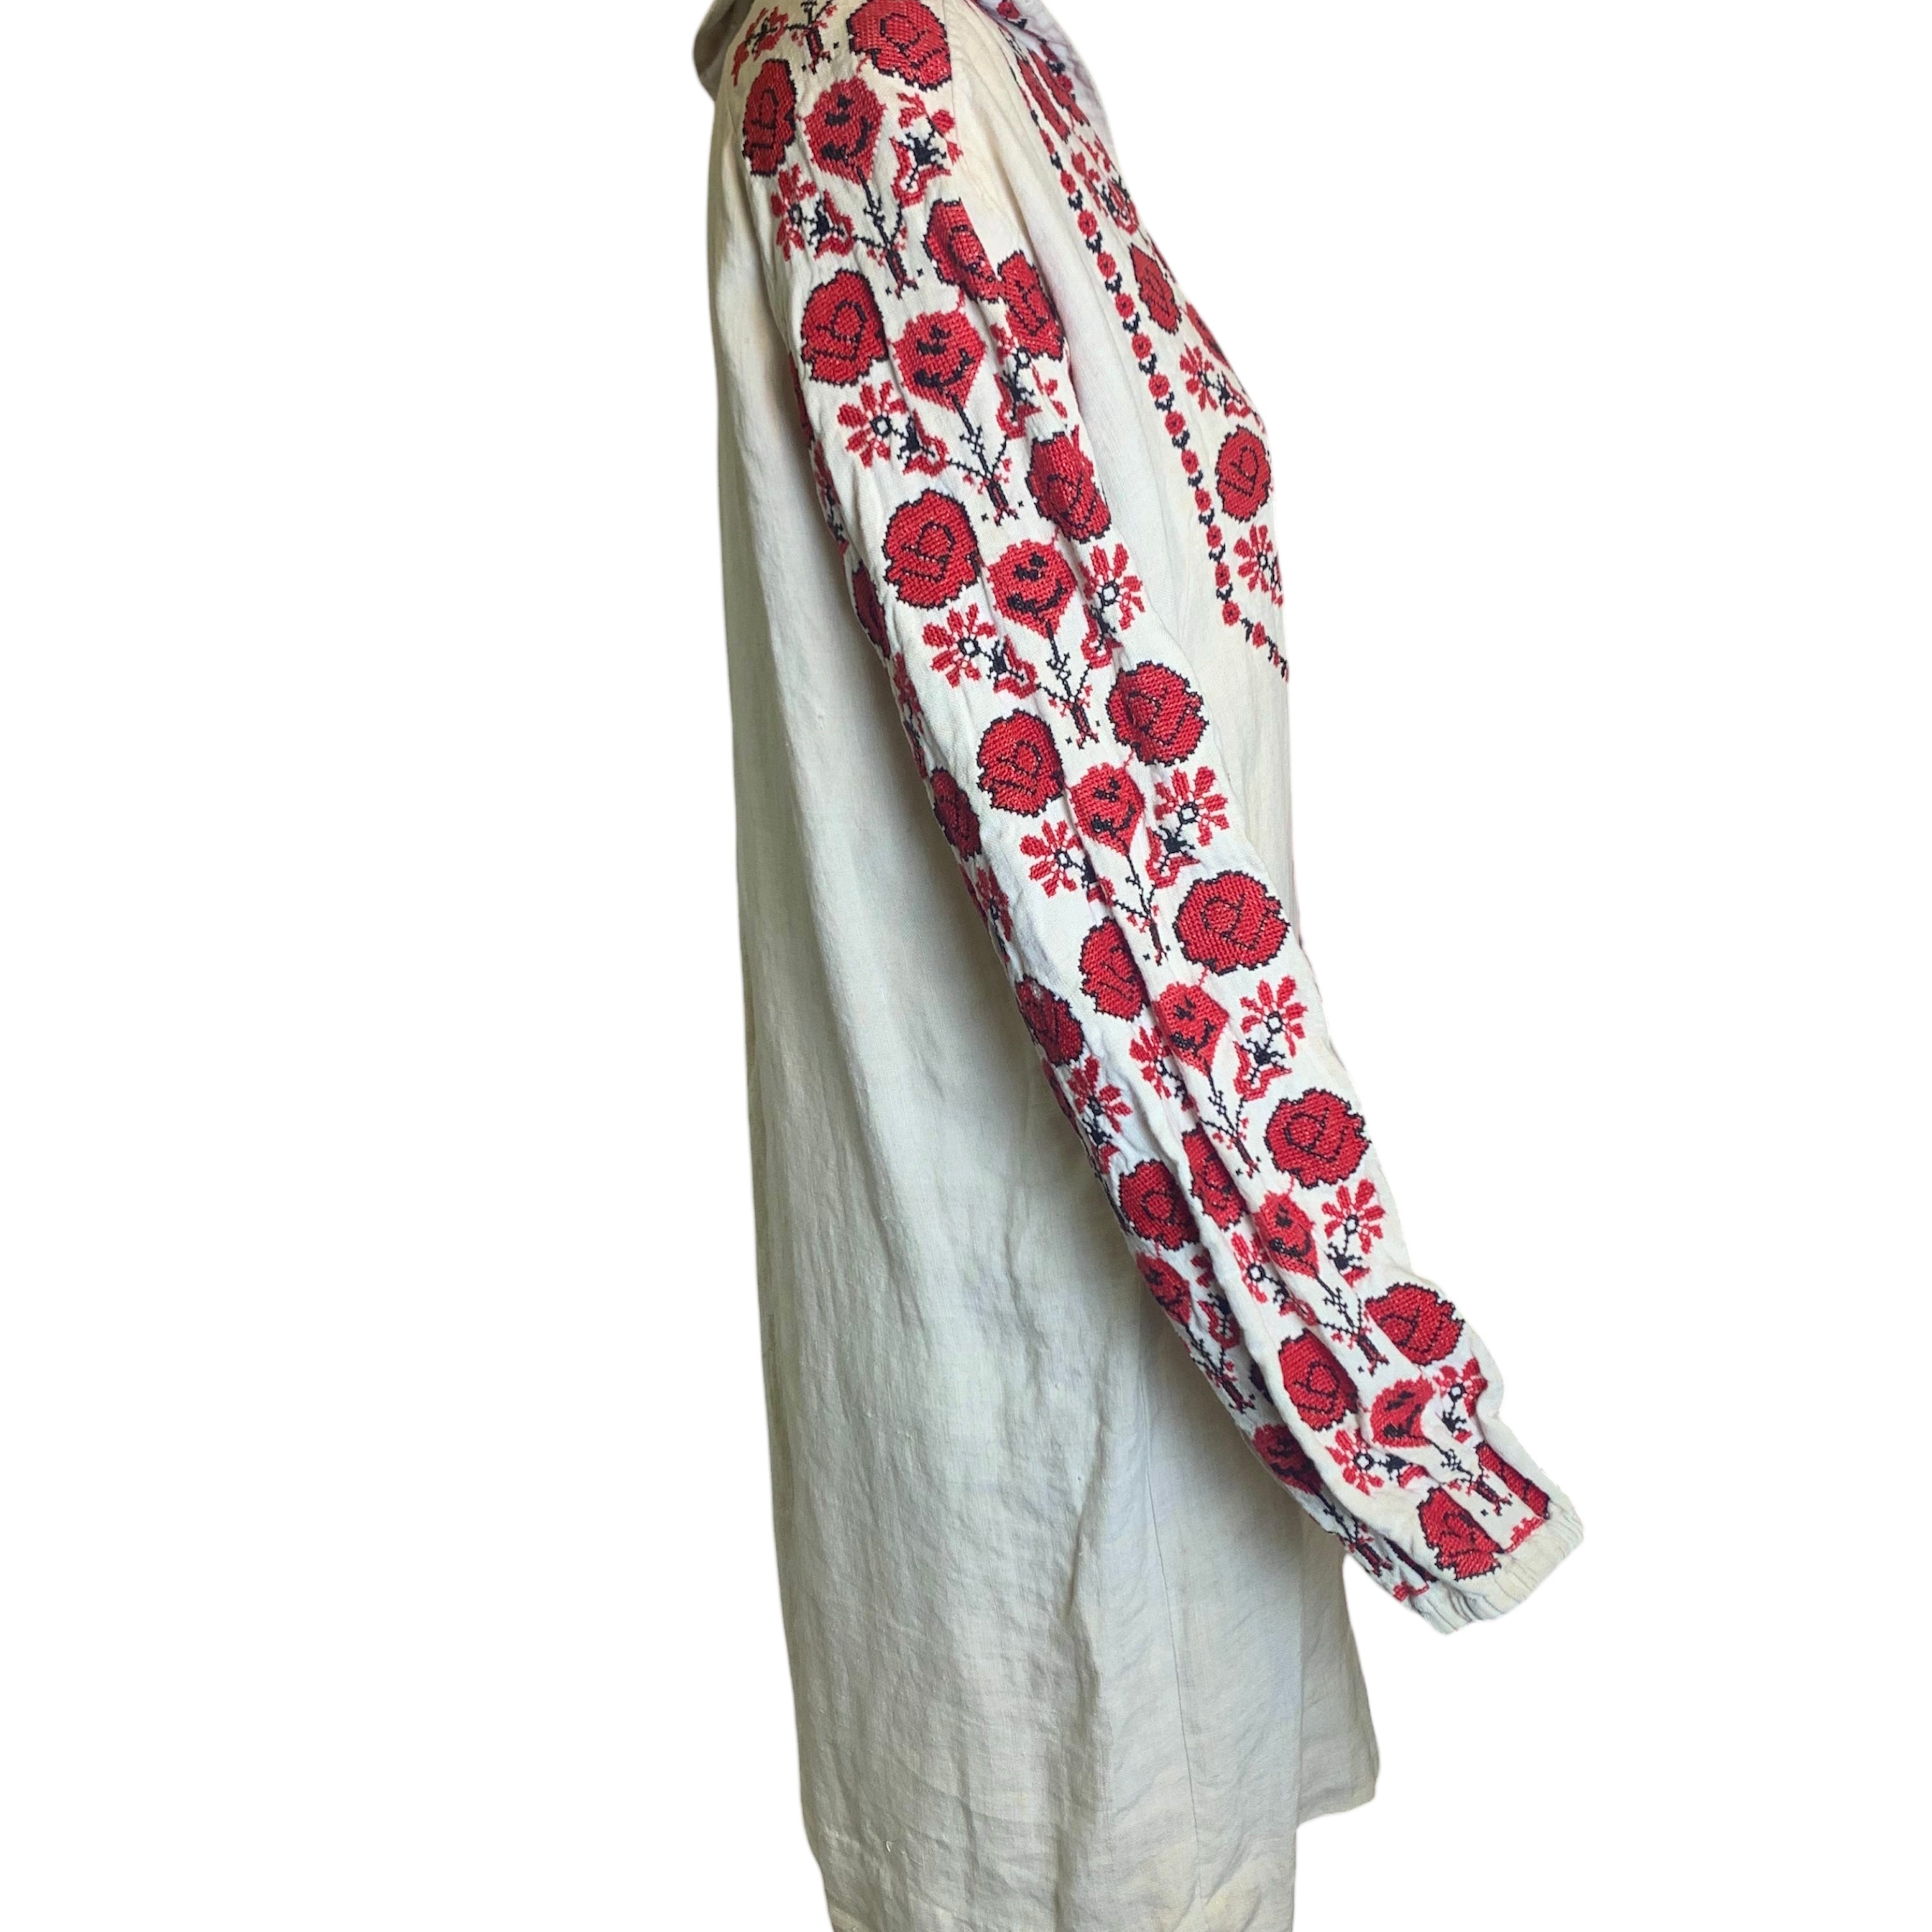  Traditonal Ukranian 1920s Red Cross Stitch Vyshyvanka Dress SIDE 2 of 6